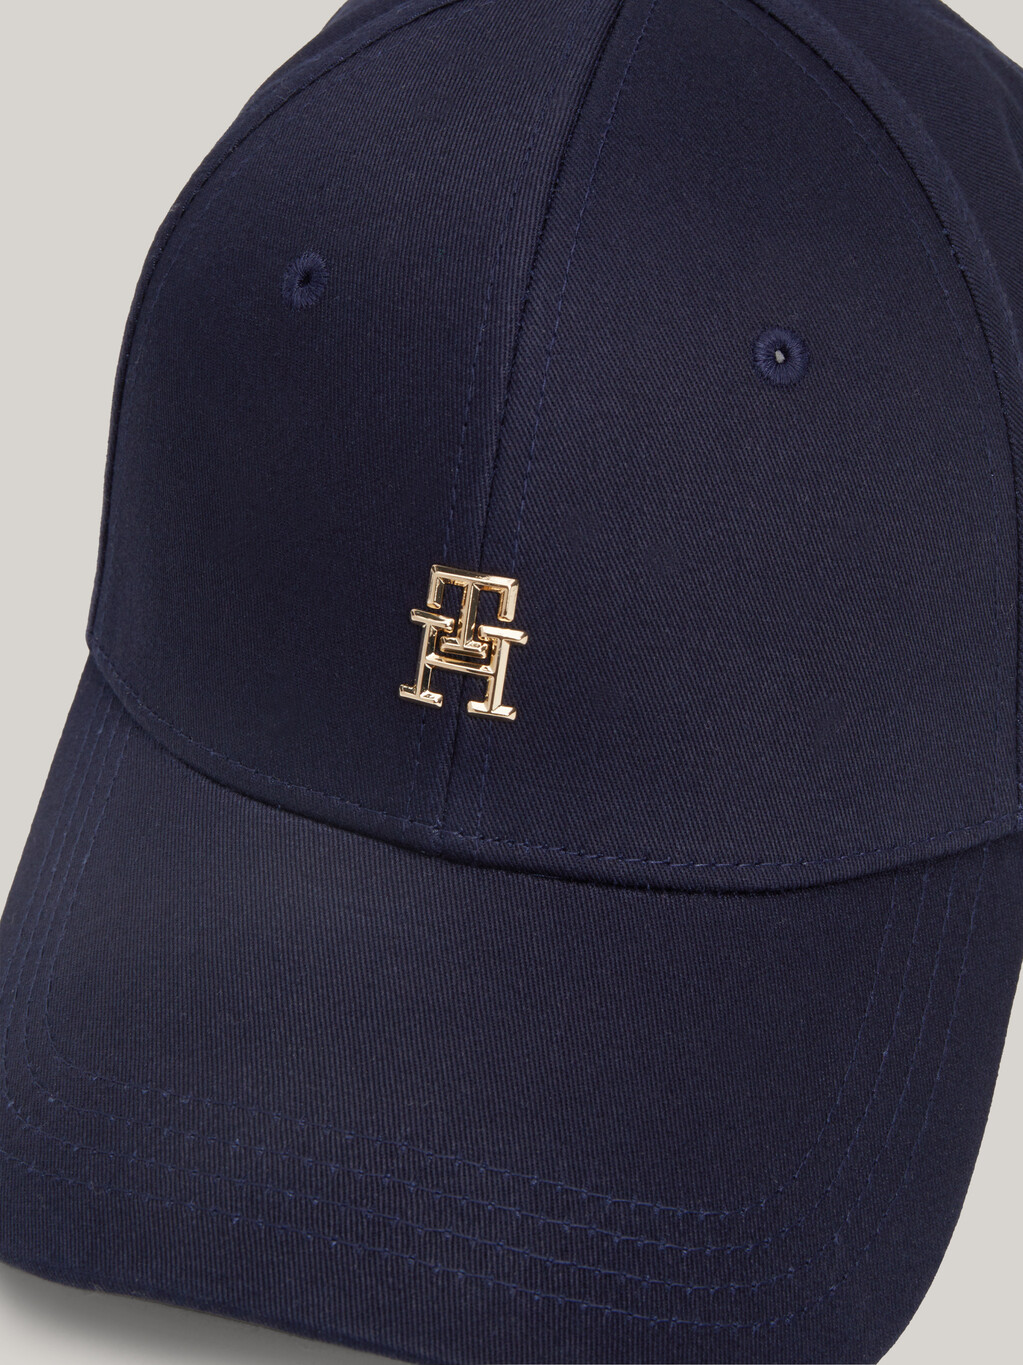 Essential Chic TH Monogram棒球帽, Space Blue, hi-res